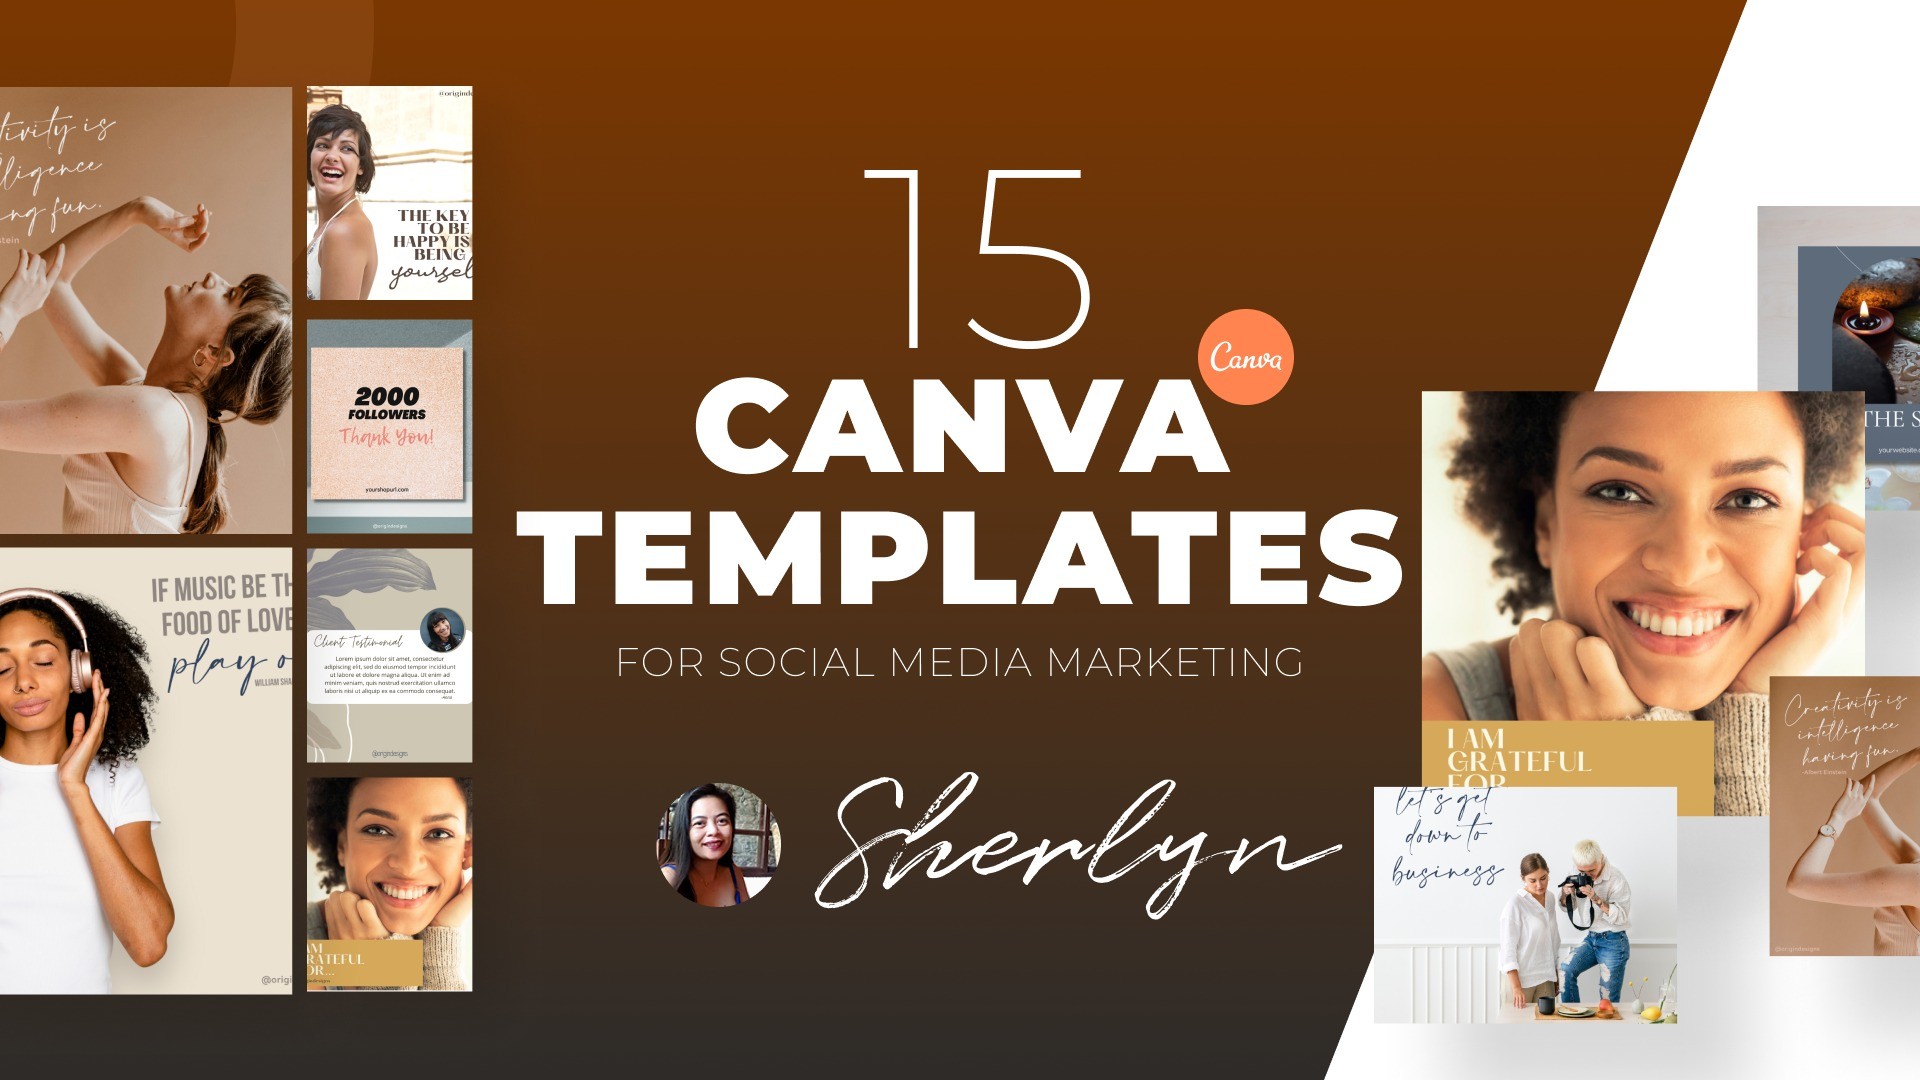 15 Canva Templates For Social Media Marketing by Sherlyn